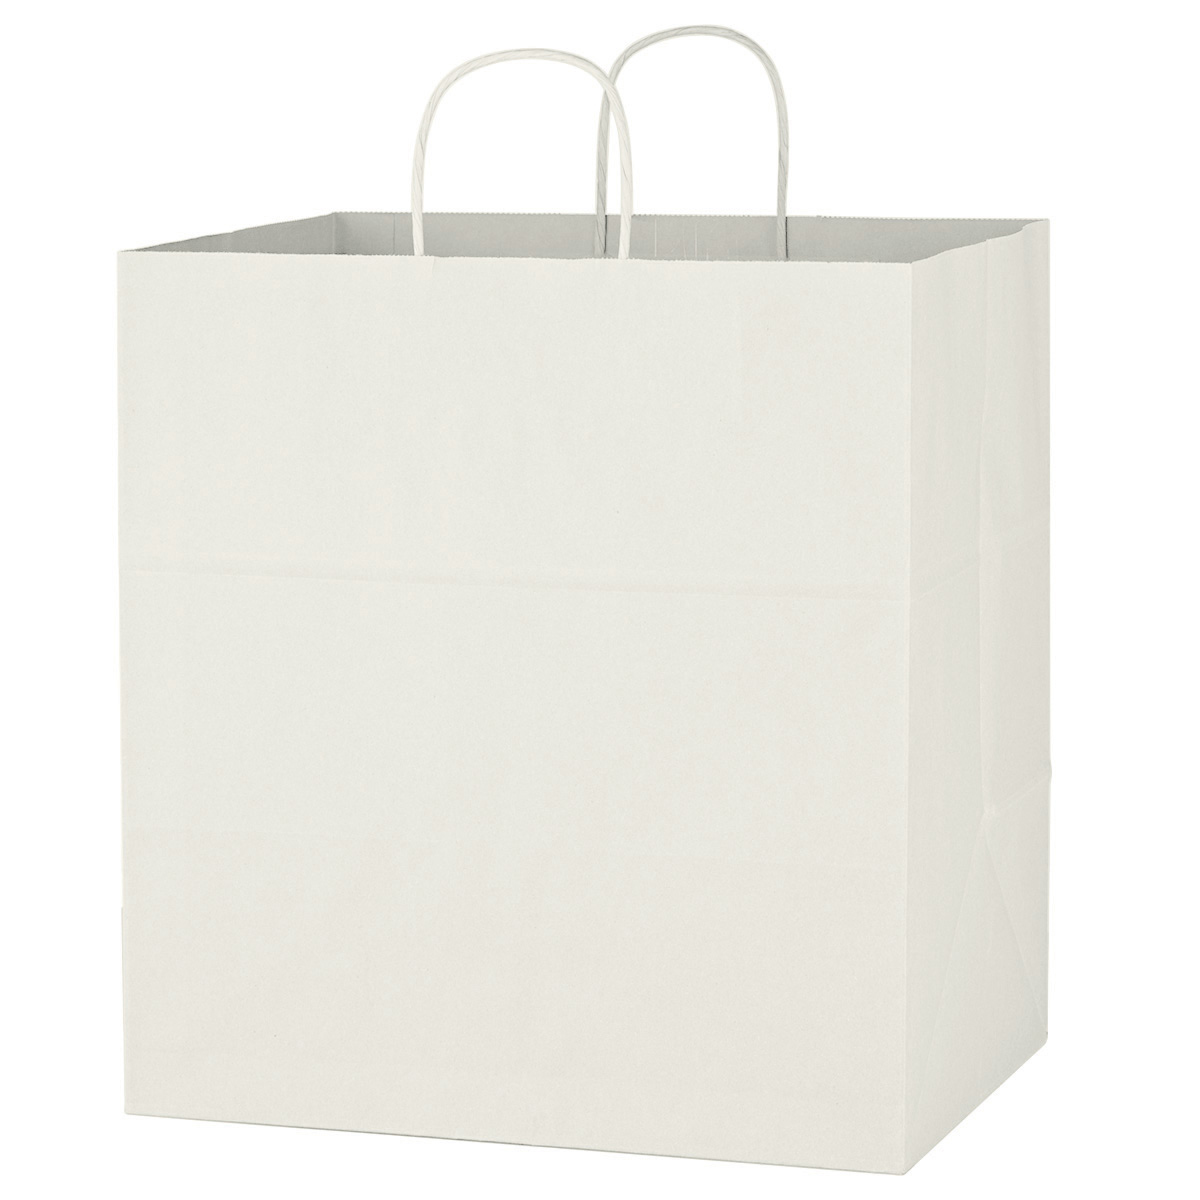 3915 - Bolsa de Papel Kraft Color Blanco para Compras 14" x 15"